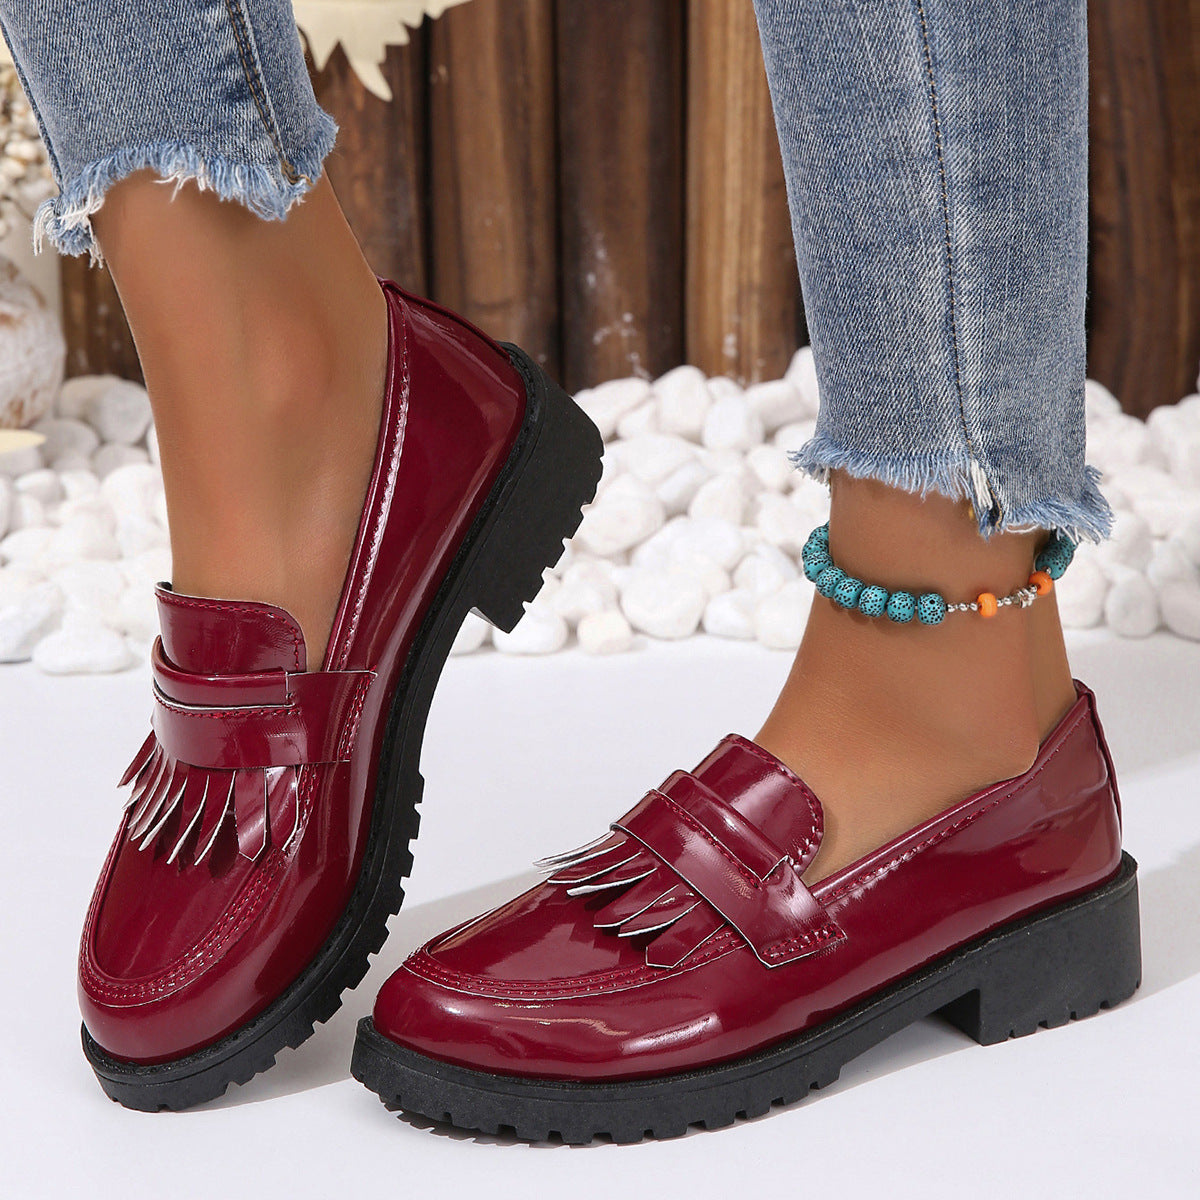 Women’s Fashion Vintage Patent Leather Shiny Shoes